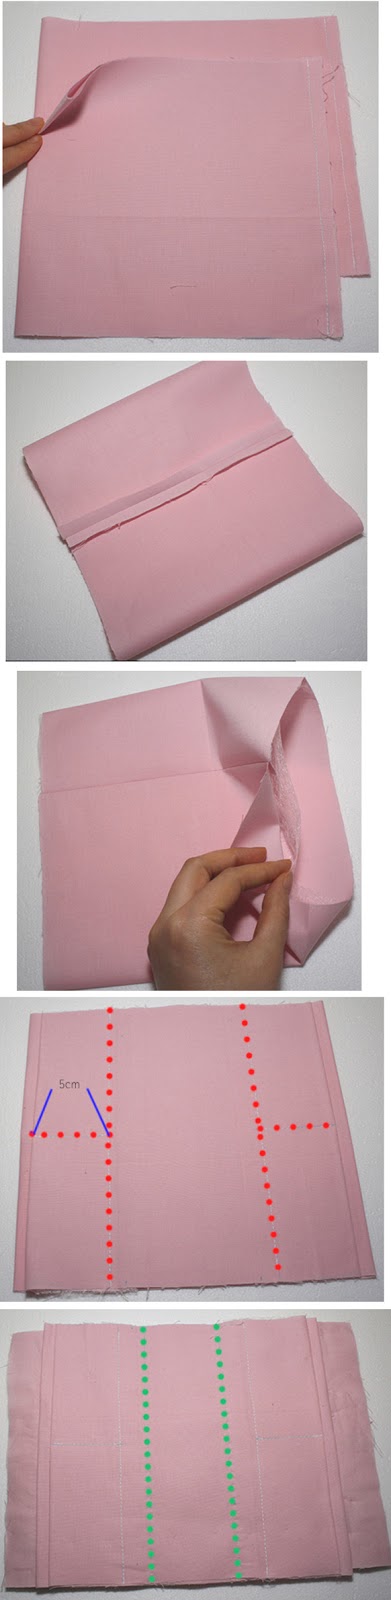 Women bags Patchwork tie-fabric clutch.  DIY step-by-step tutorial. Косметичка или клатч в технике пэтчворк